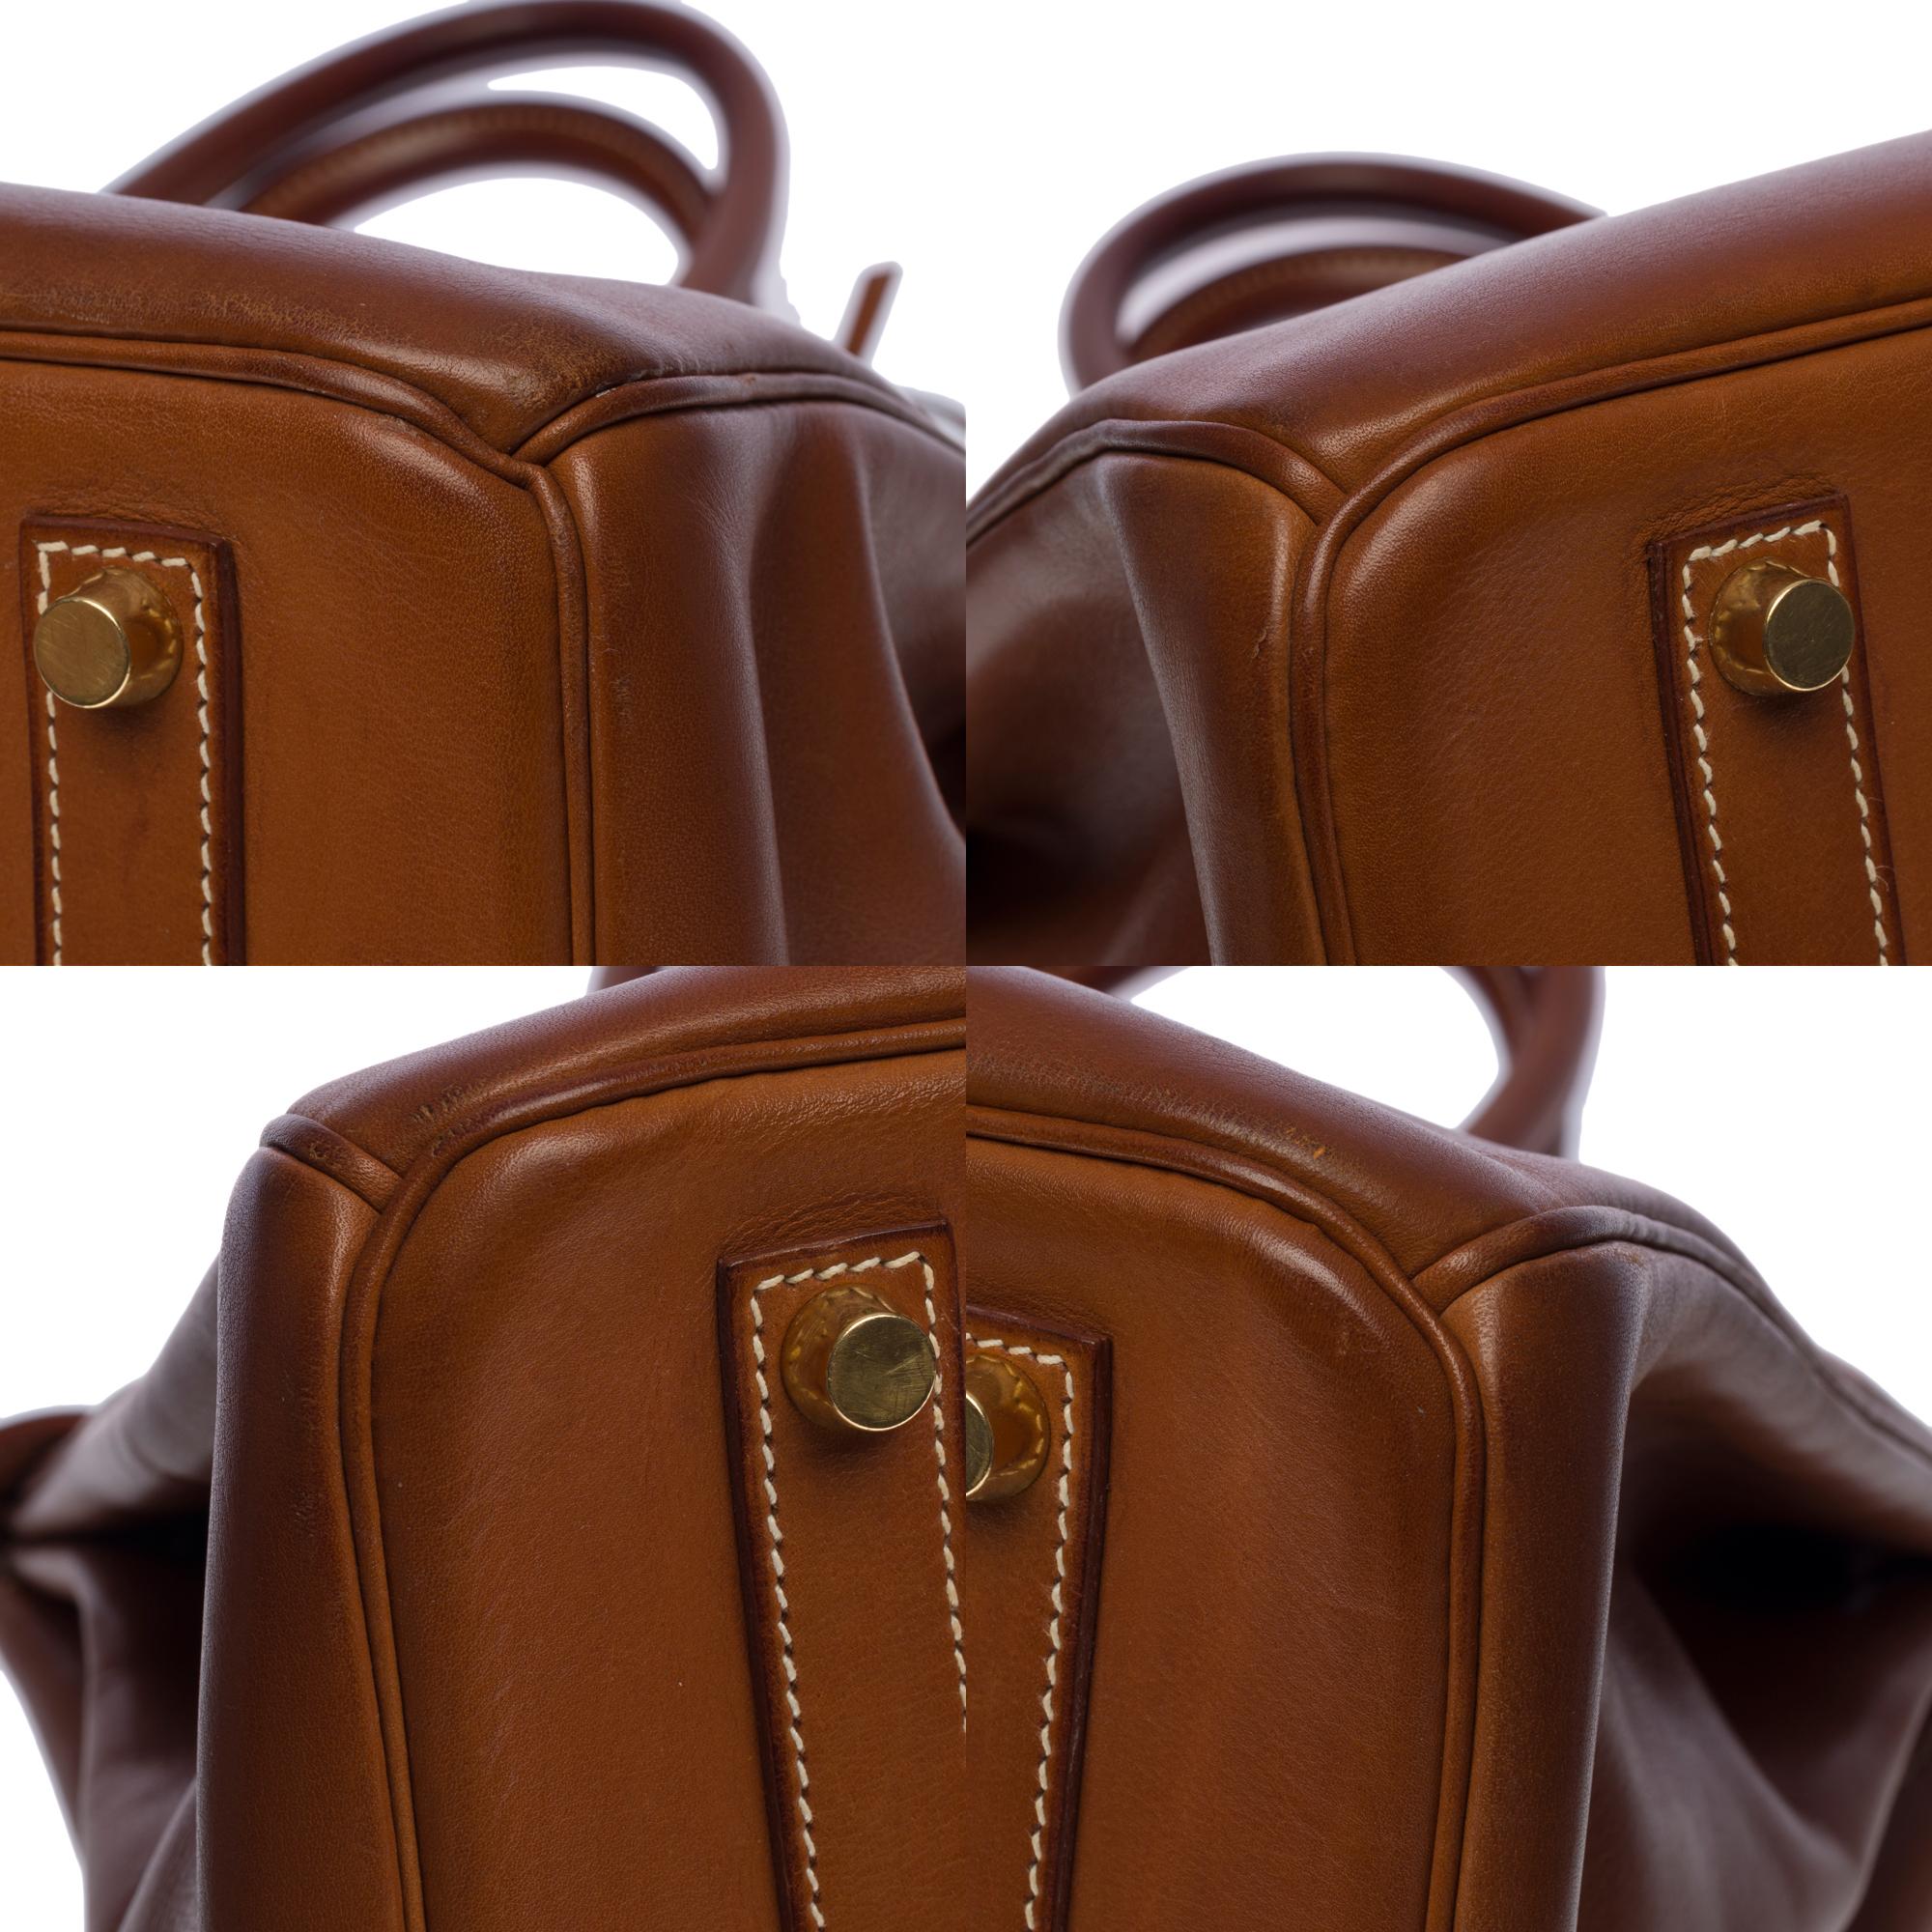 Rare & Exceptional Hermès Birkin 35 handbag in Gold Barenia leather, GHW 2